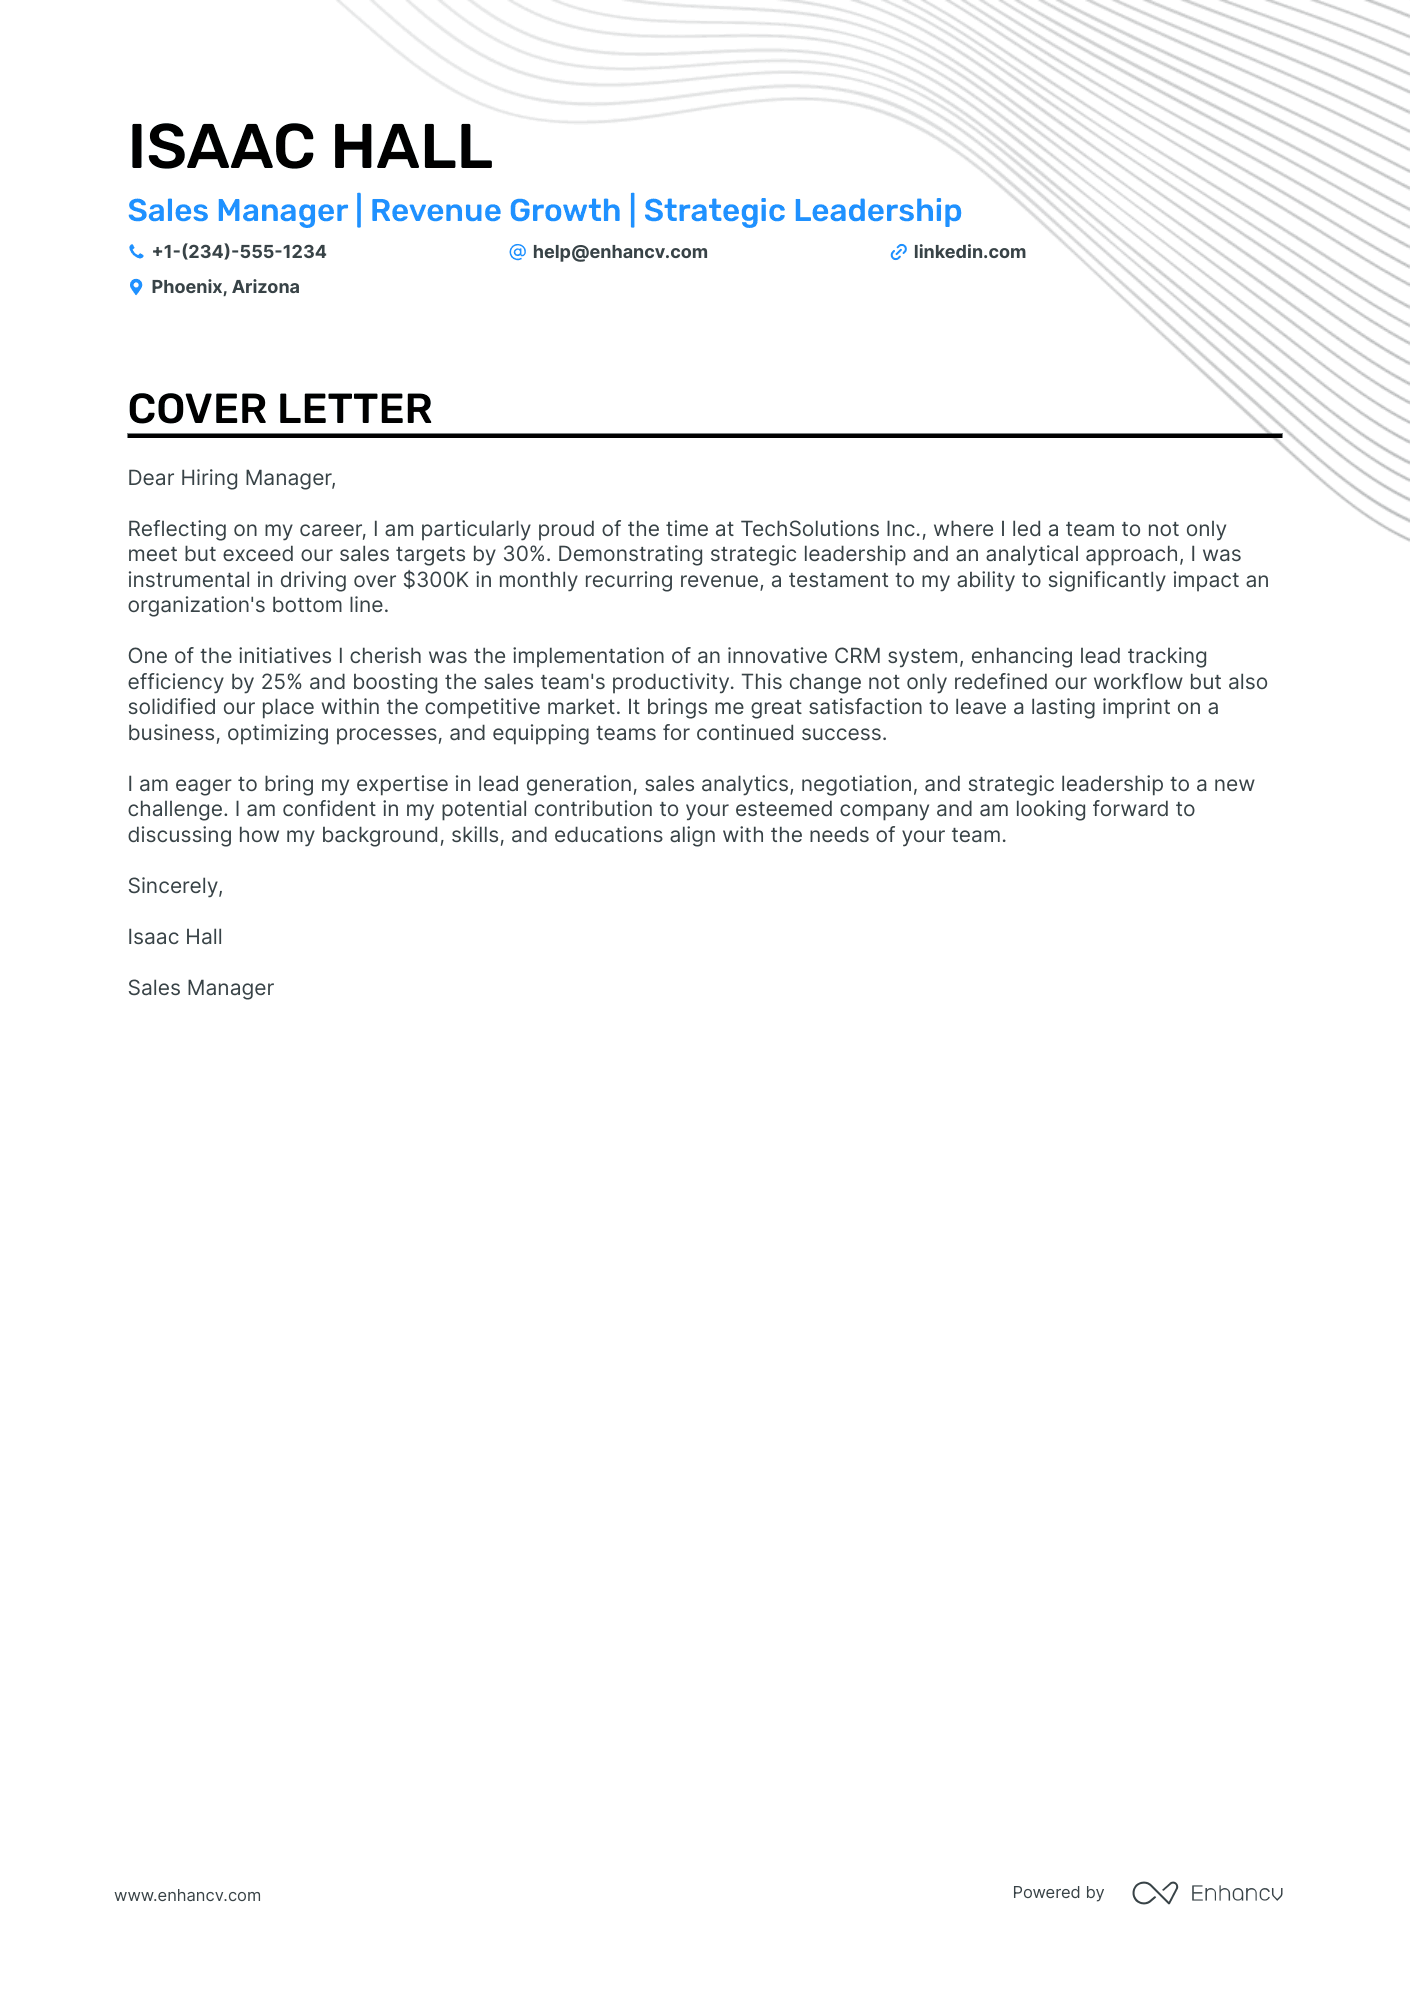 Real Estate Sales Manager cover letter